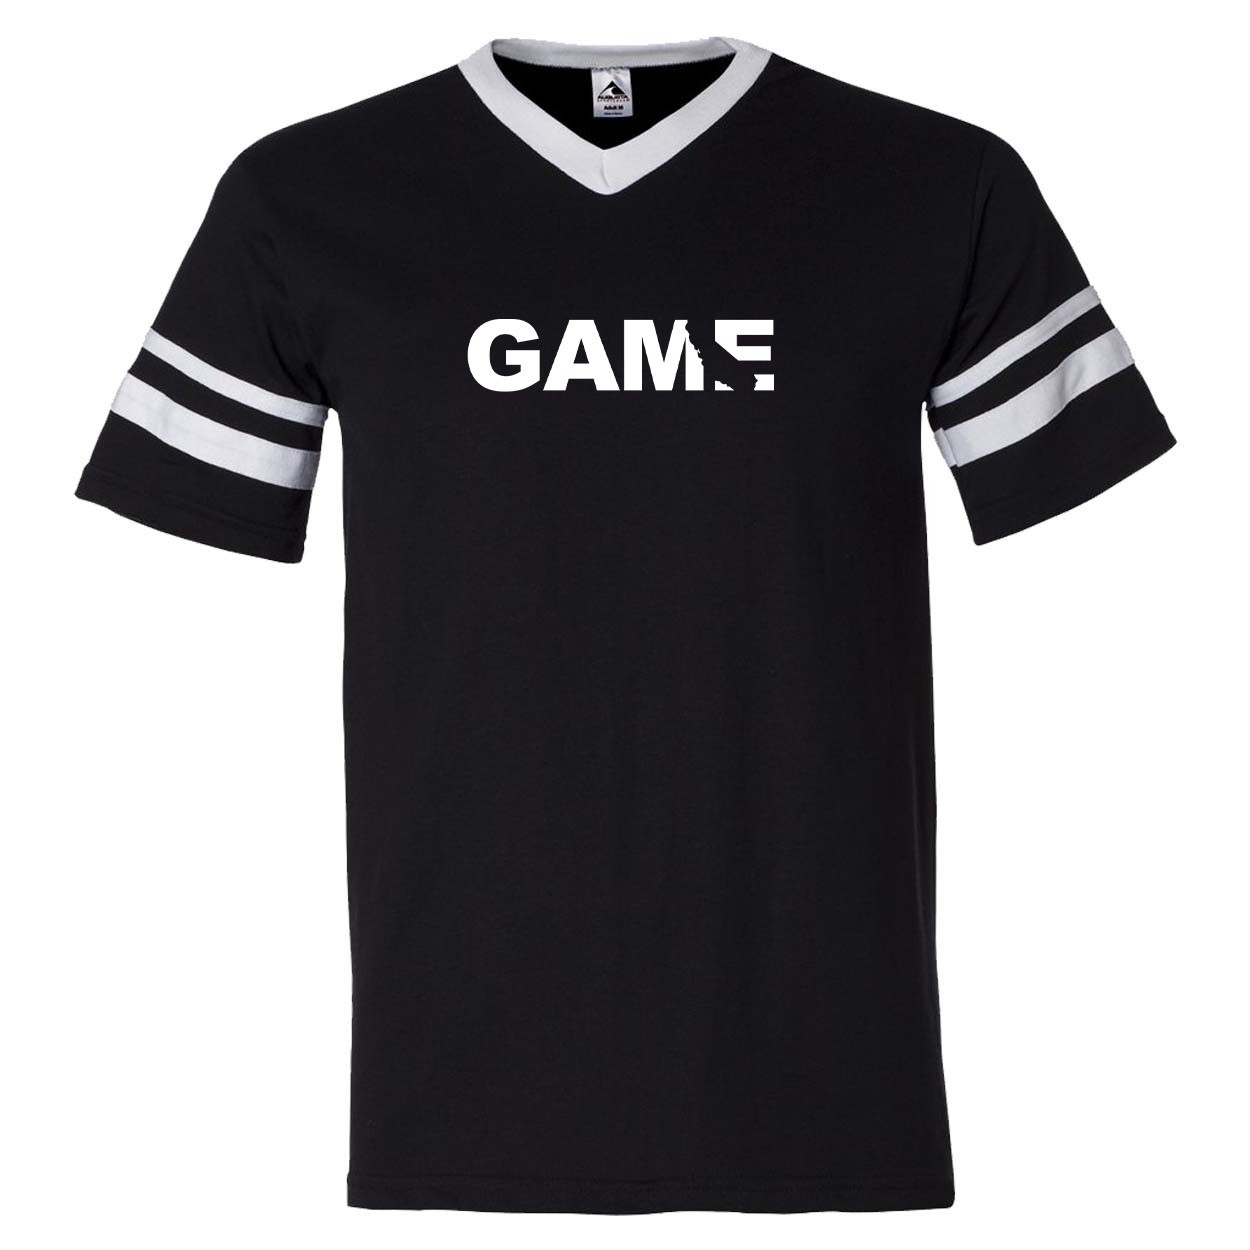 Game California Classic Premium Striped Jersey T-Shirt Black/White (White Logo)